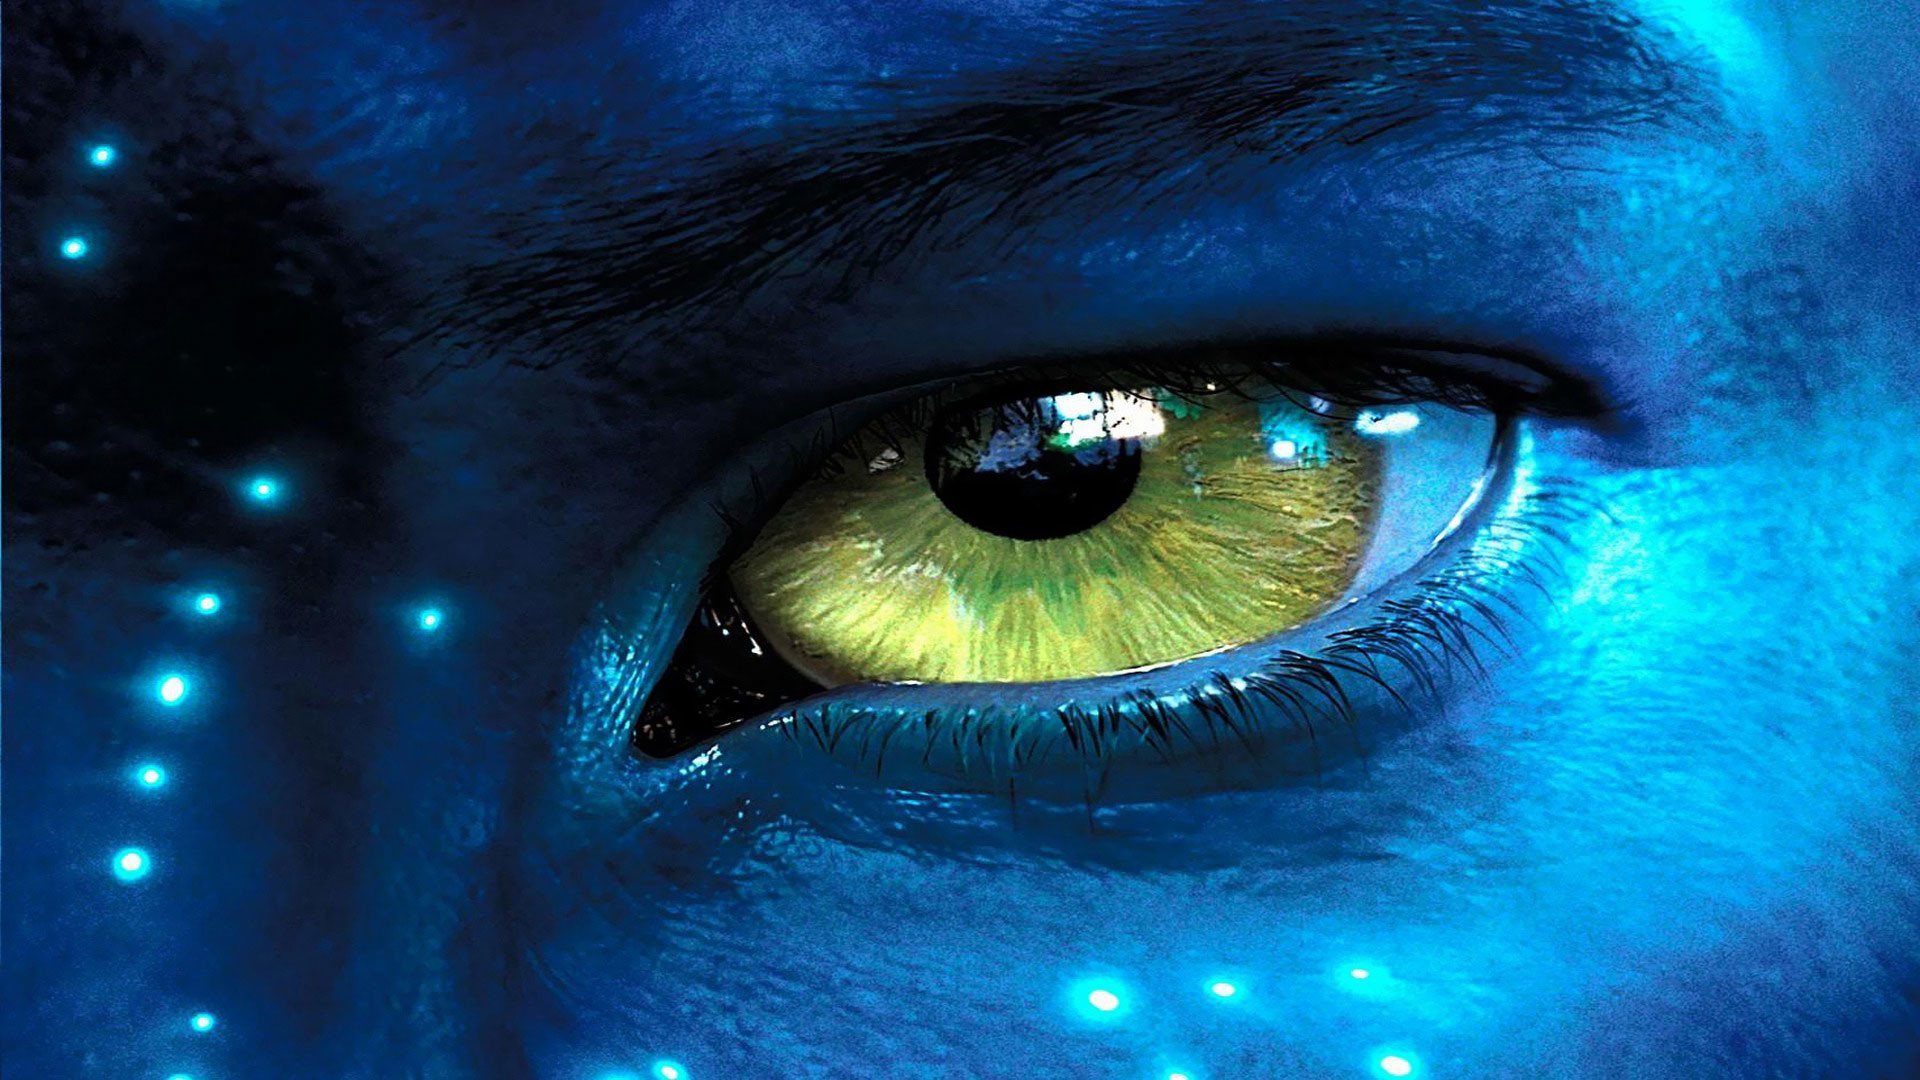 Hd pics photos beautiful stunning avatar eye hollywood movie character hd quality desktop background wallpaper